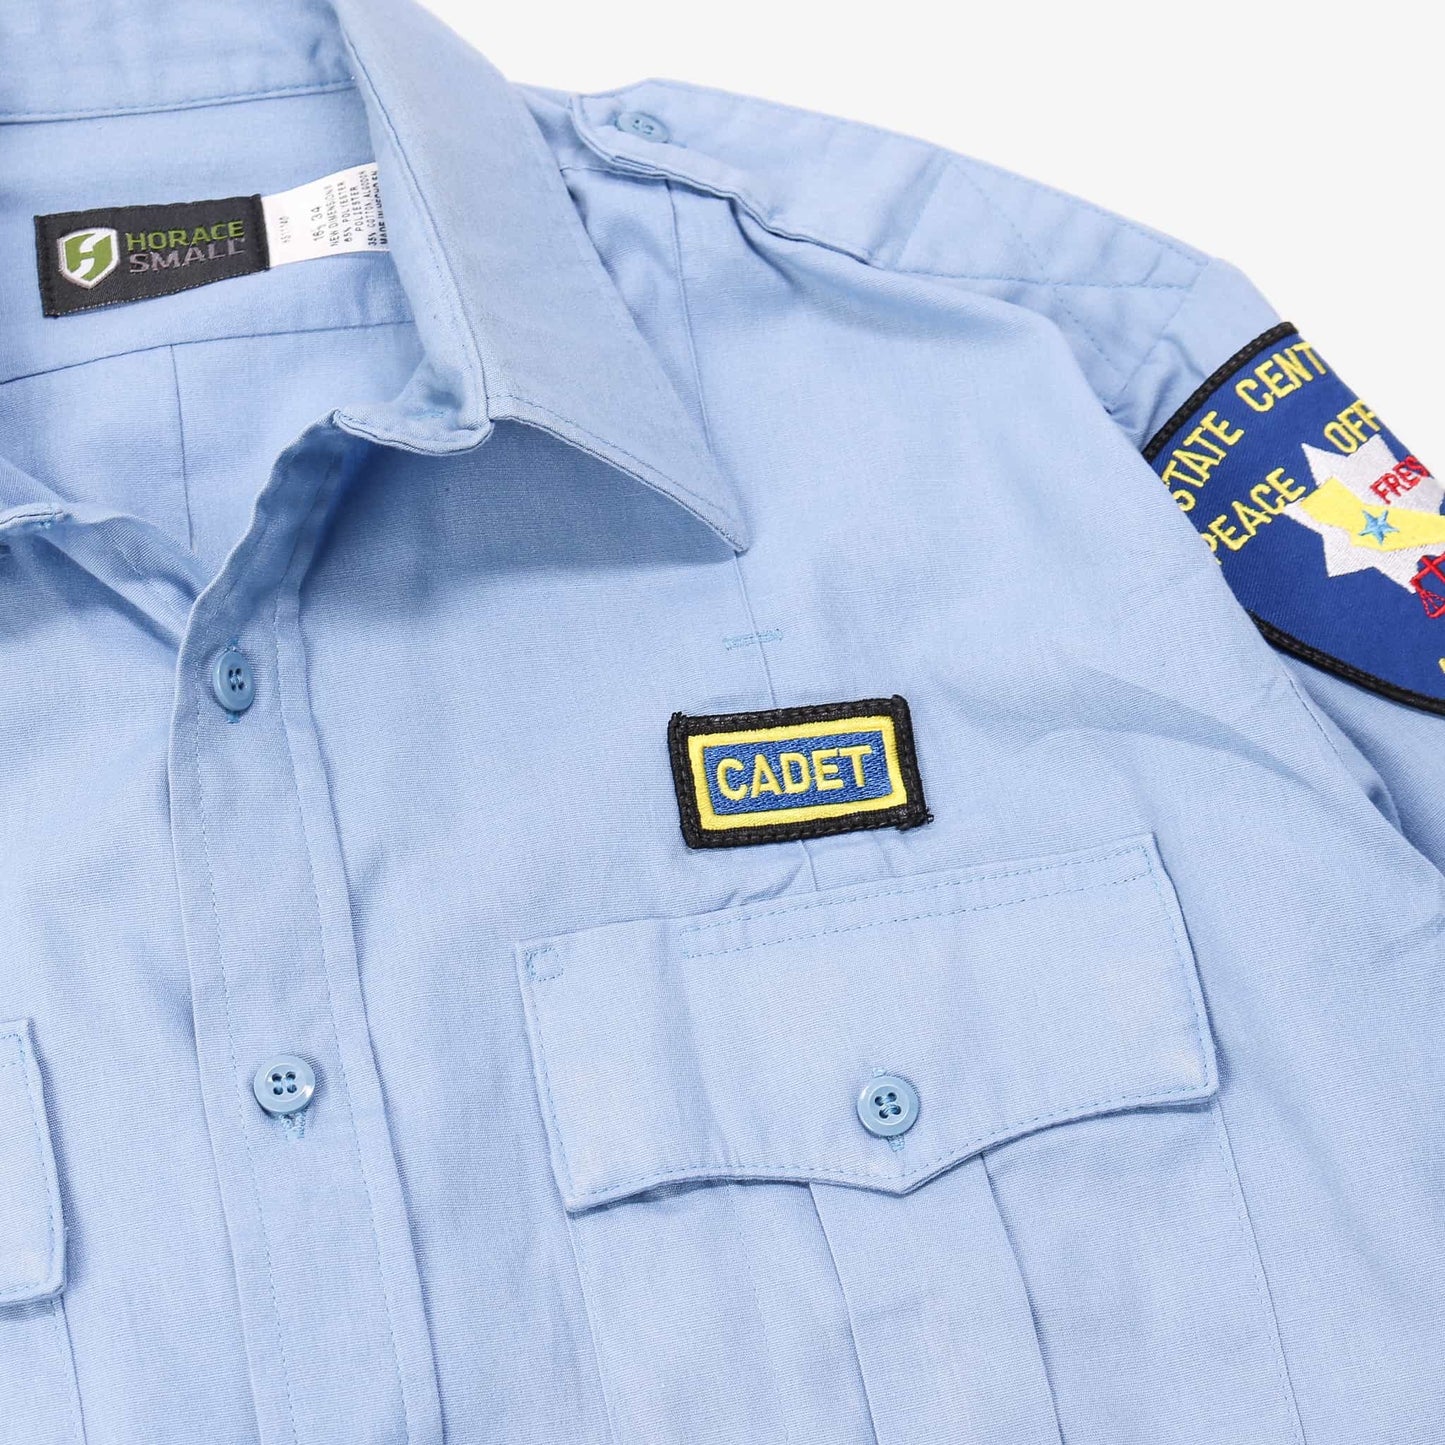 'Cadet' Garage Work Shirt - American Madness